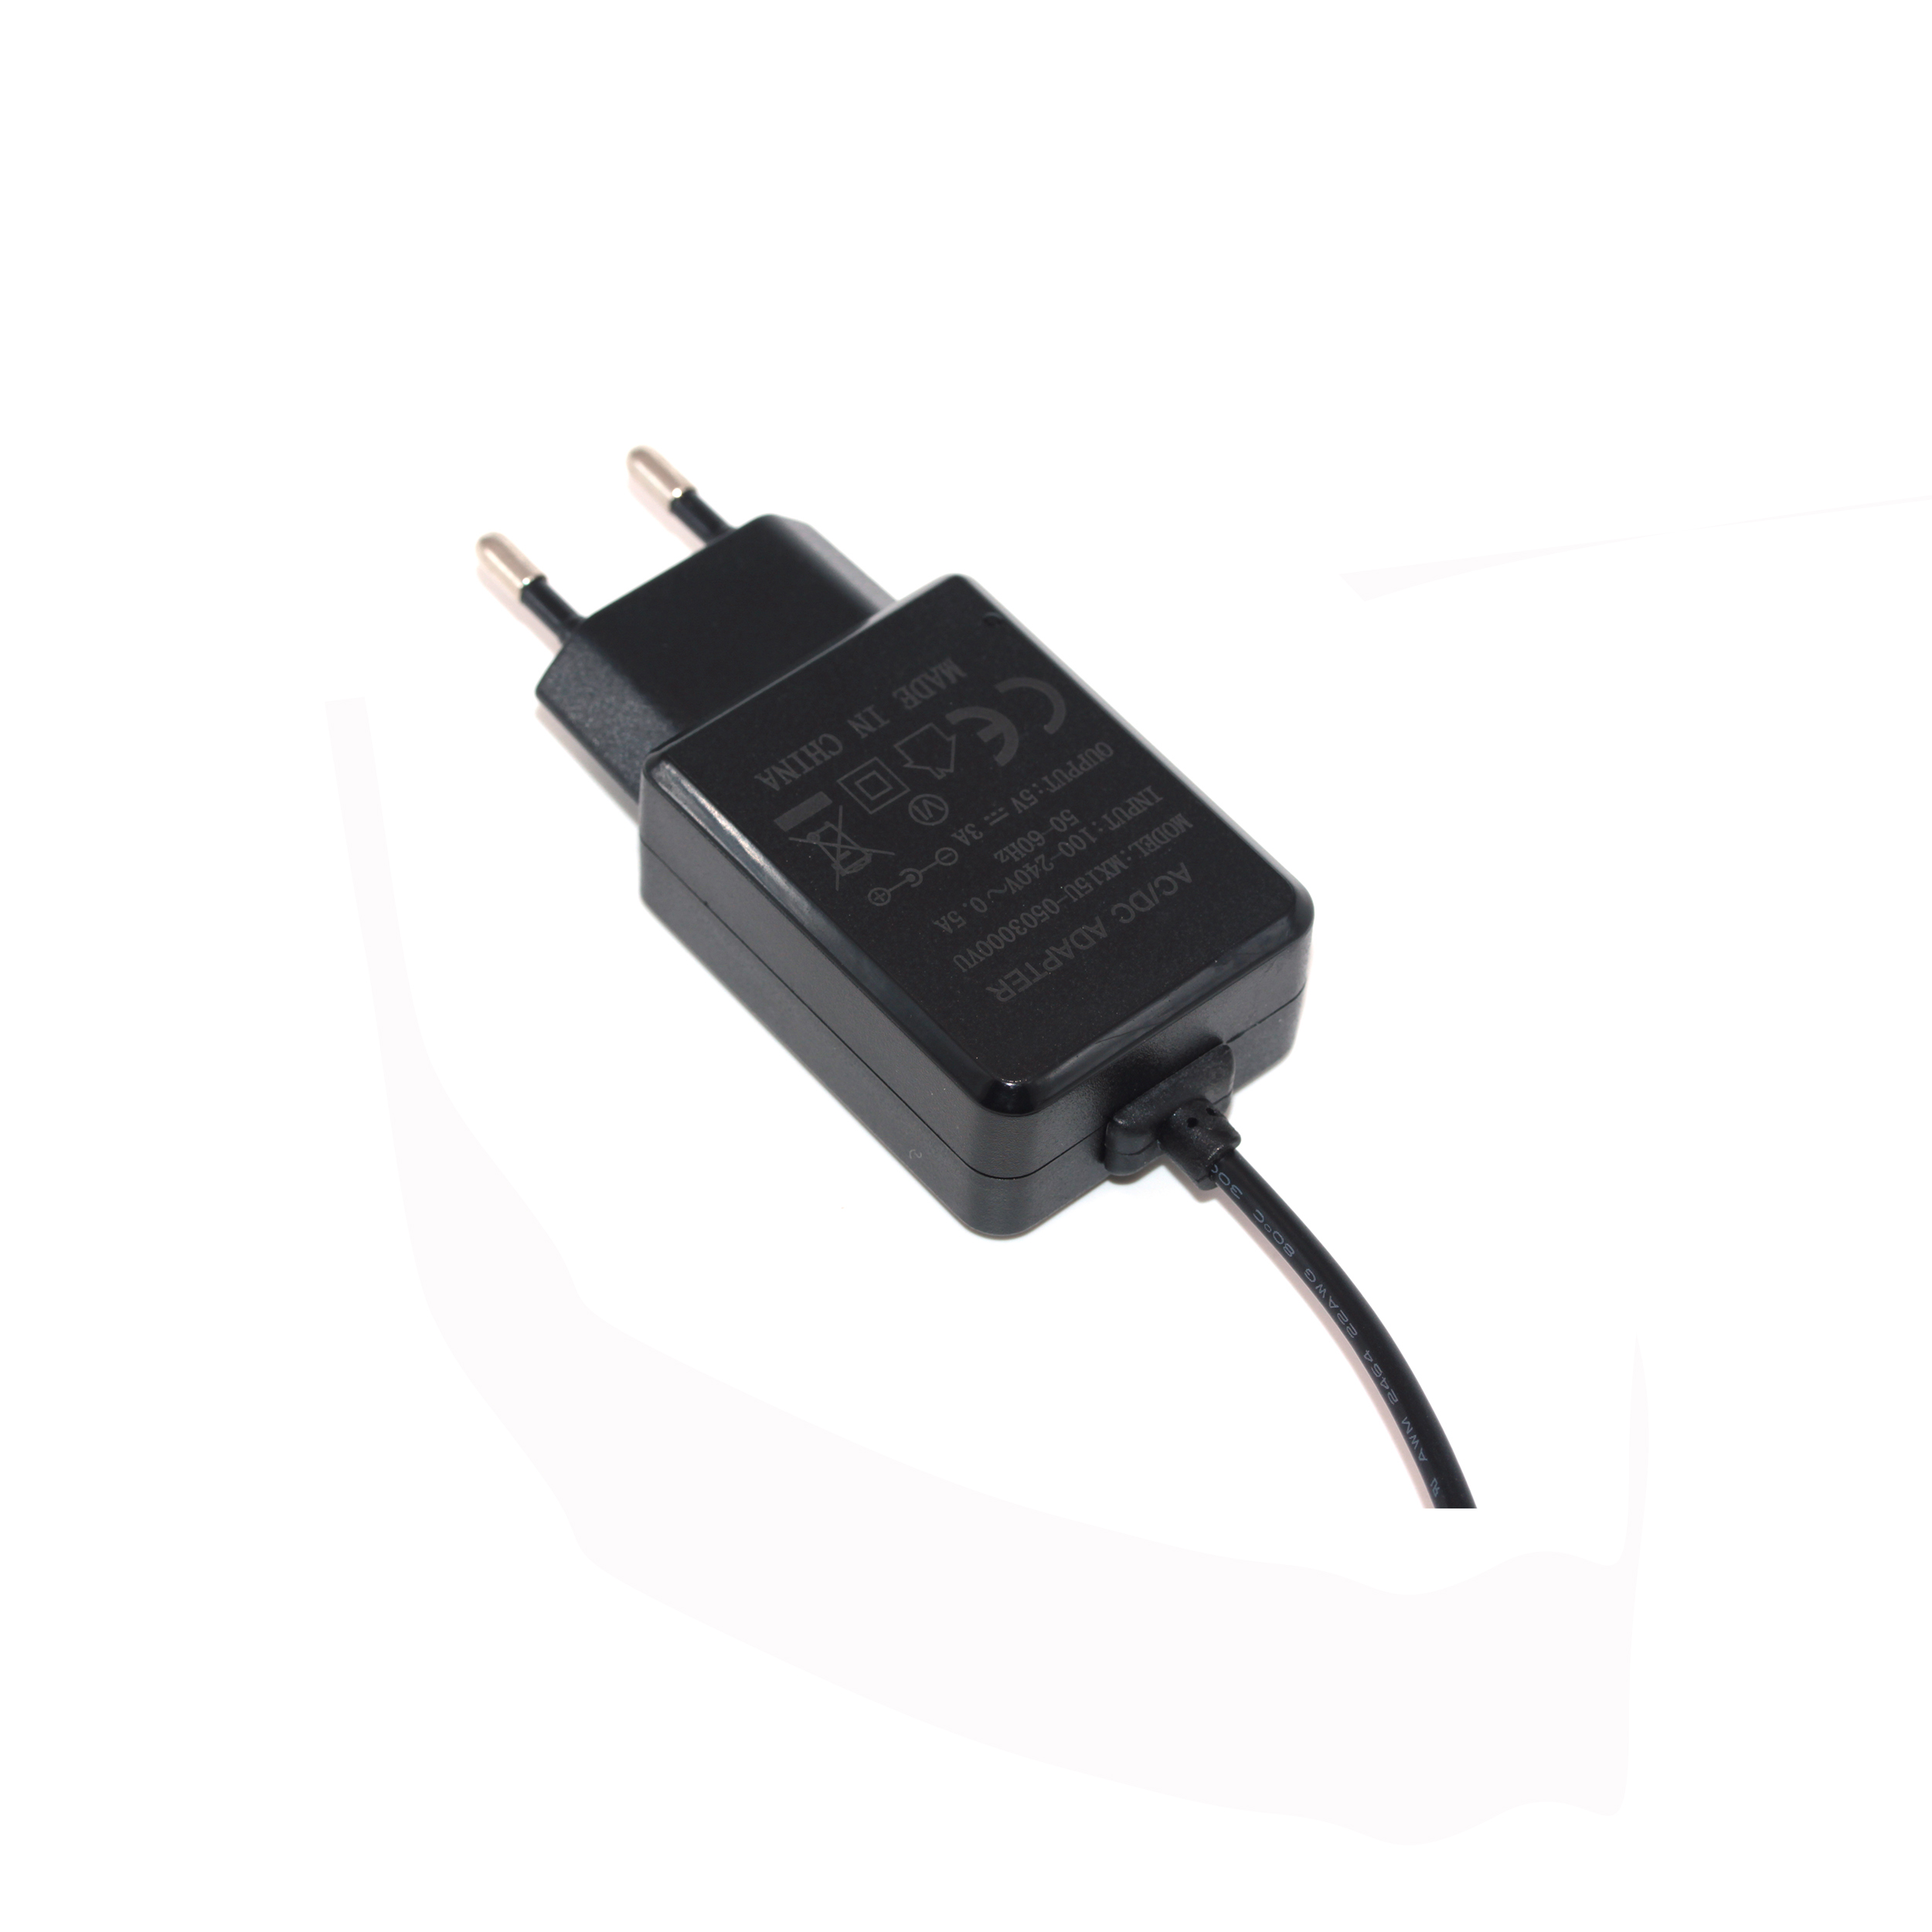 5V3A eu plug power adapter with dc cable